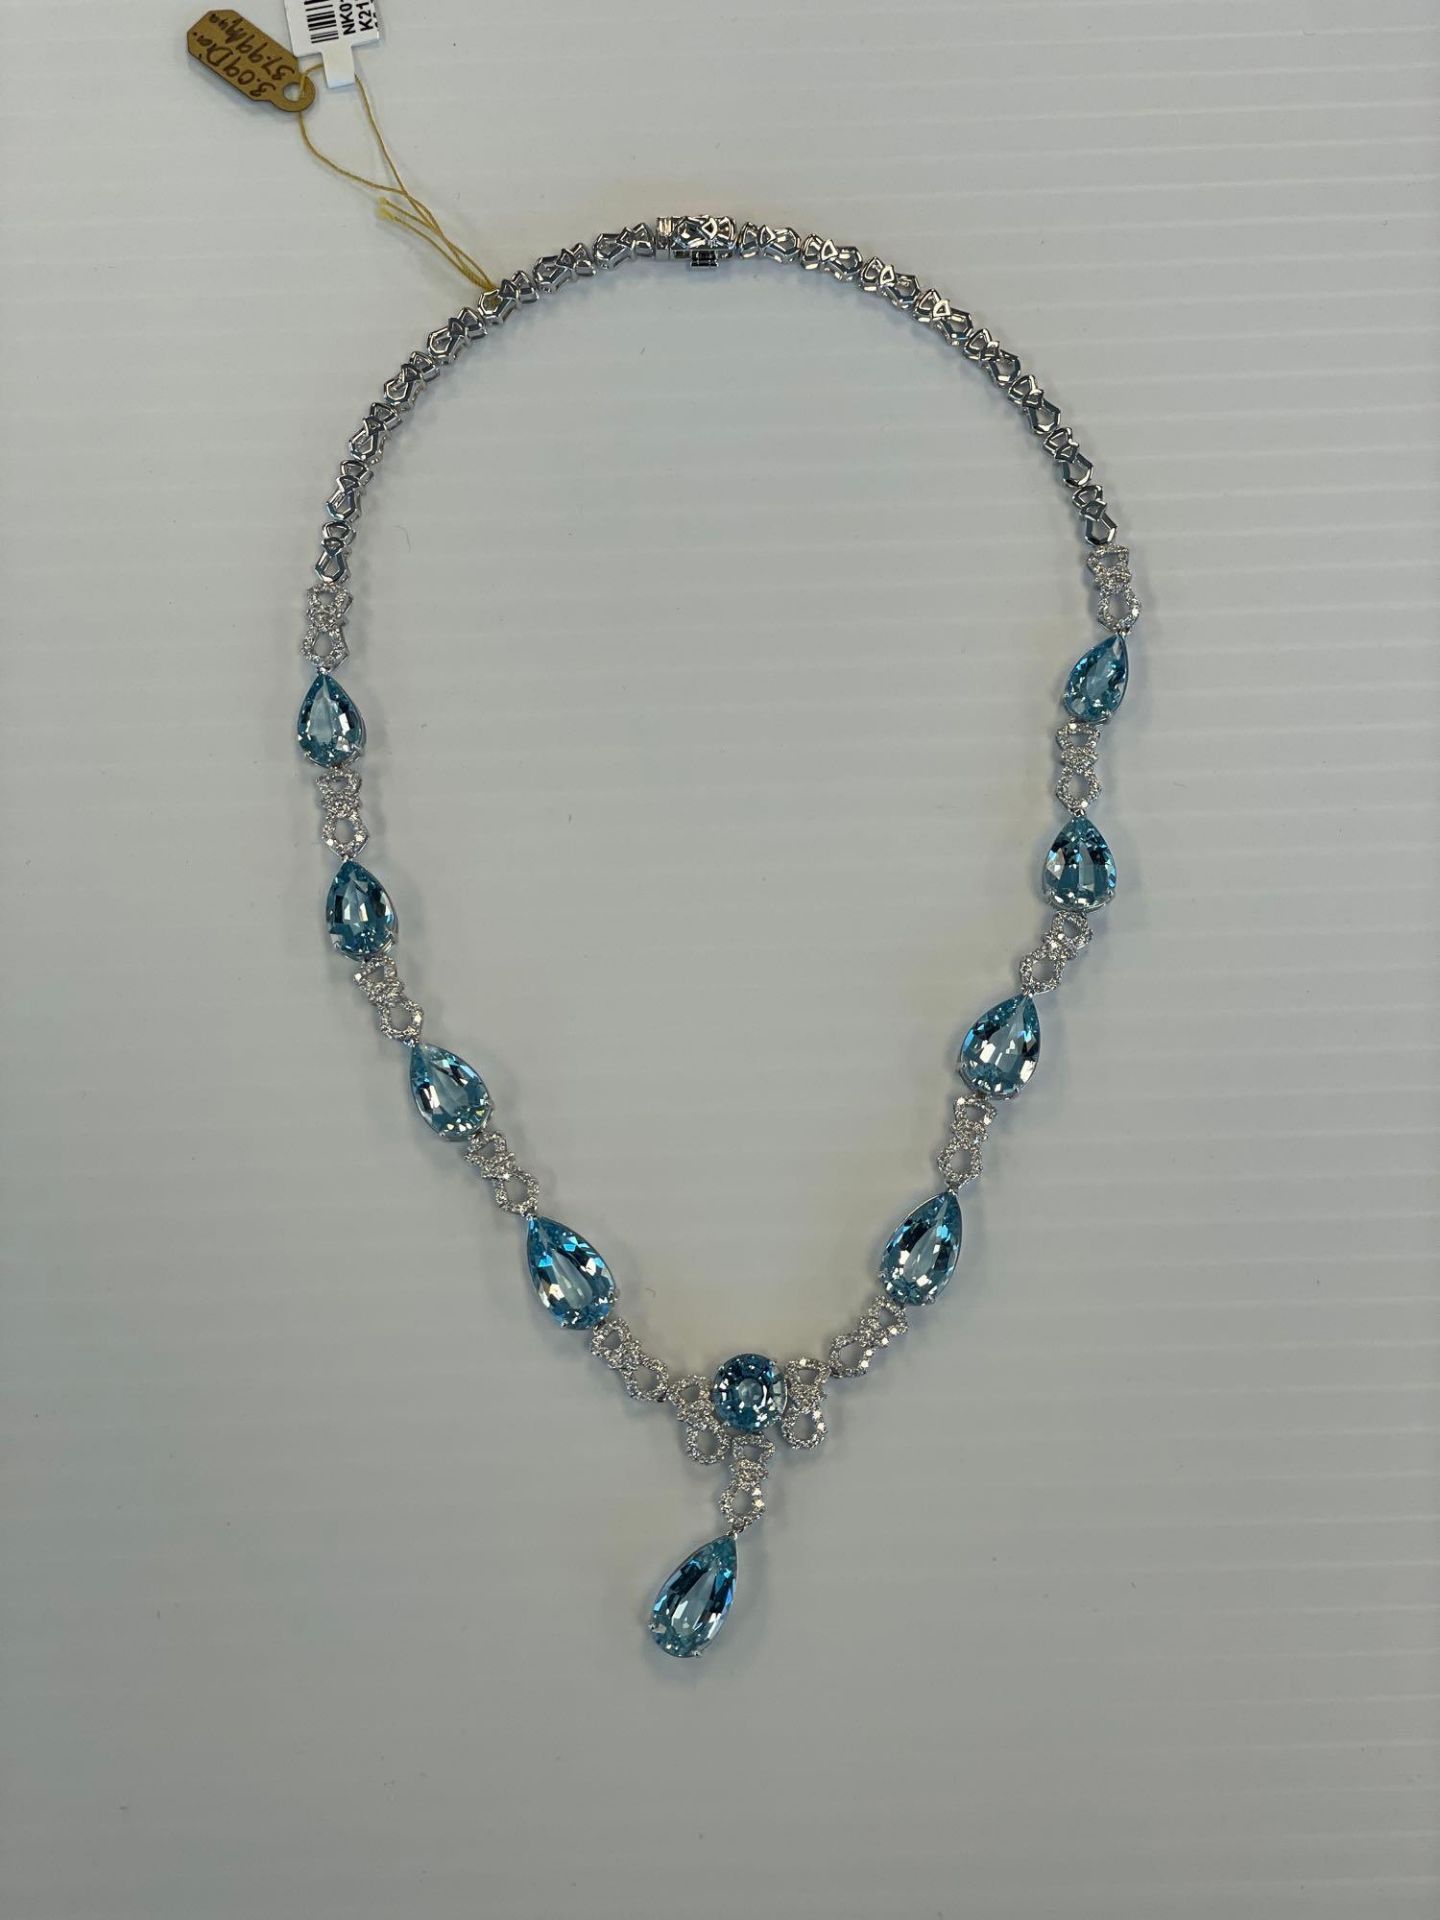 14kt white gold 37.99 ctw aquamarine beryl and 3.09 ctw diamond necklace